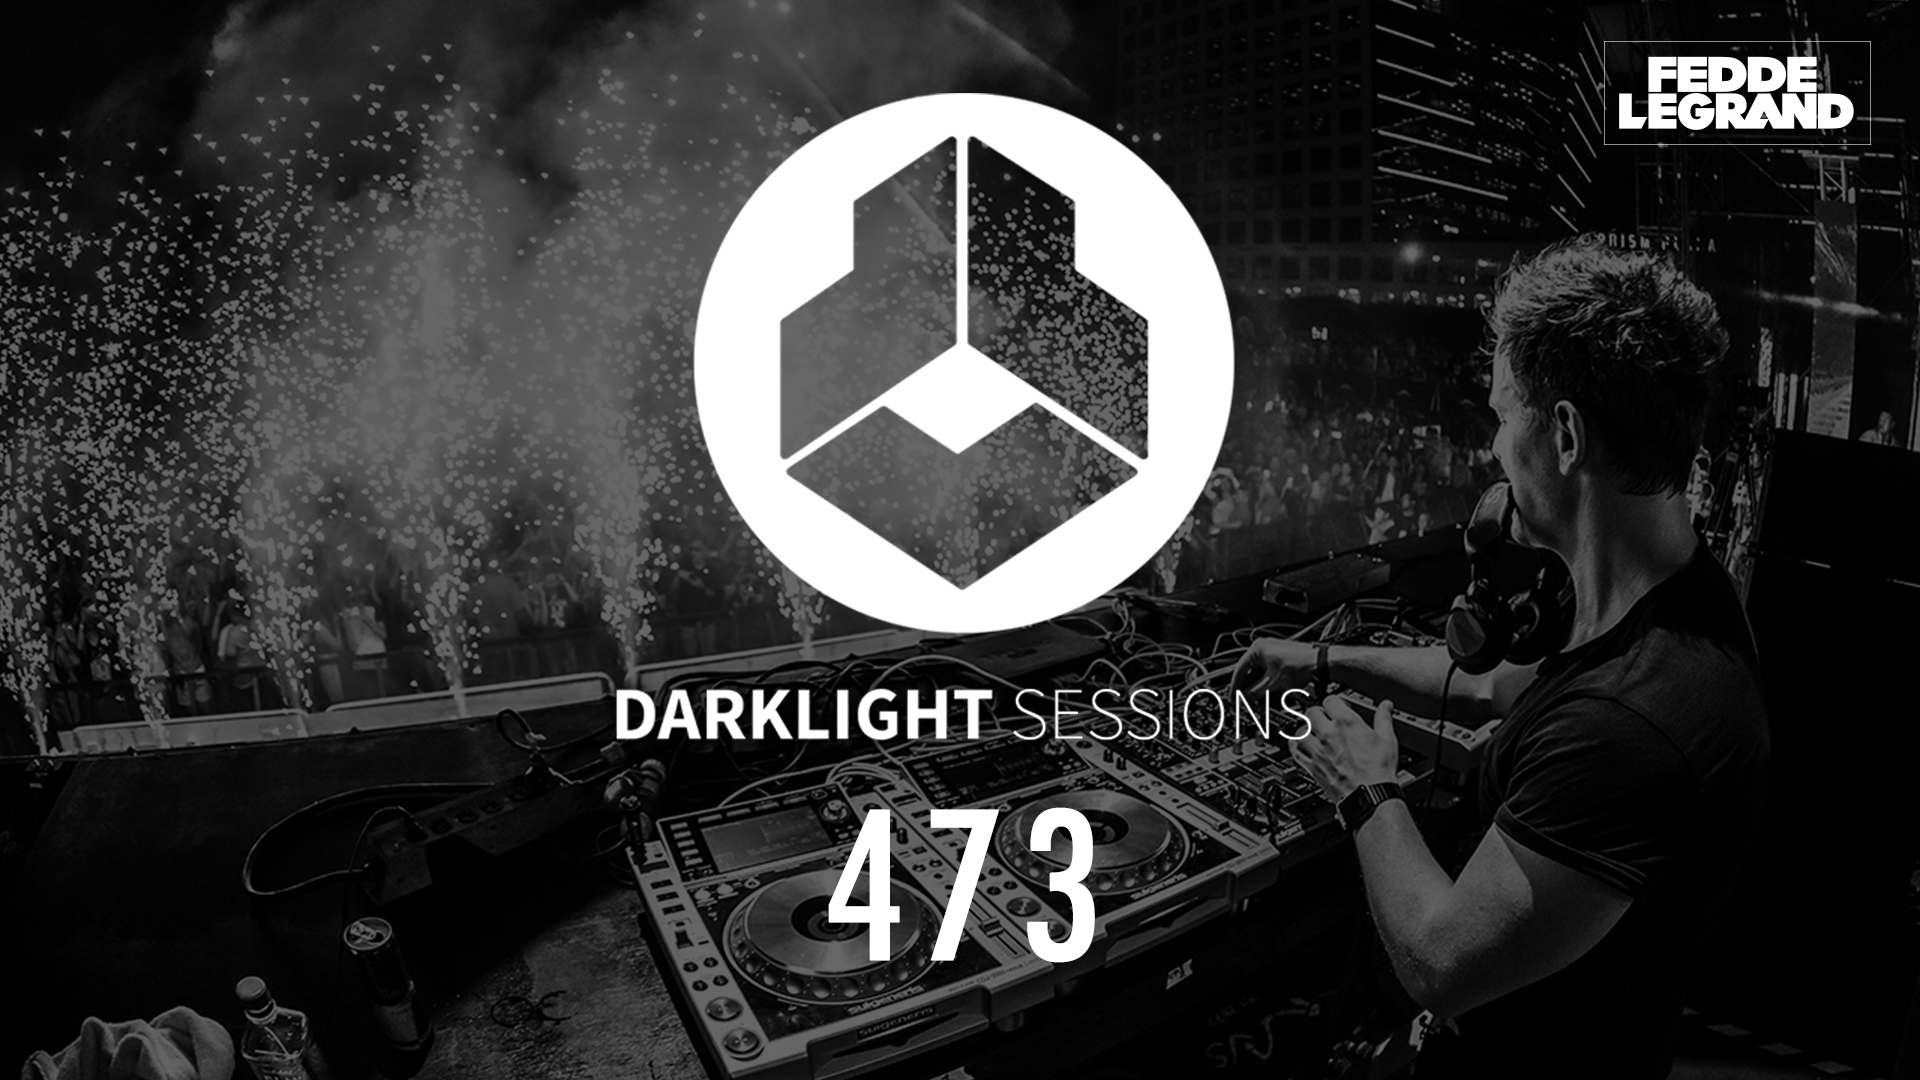 Darklight Sessions 473